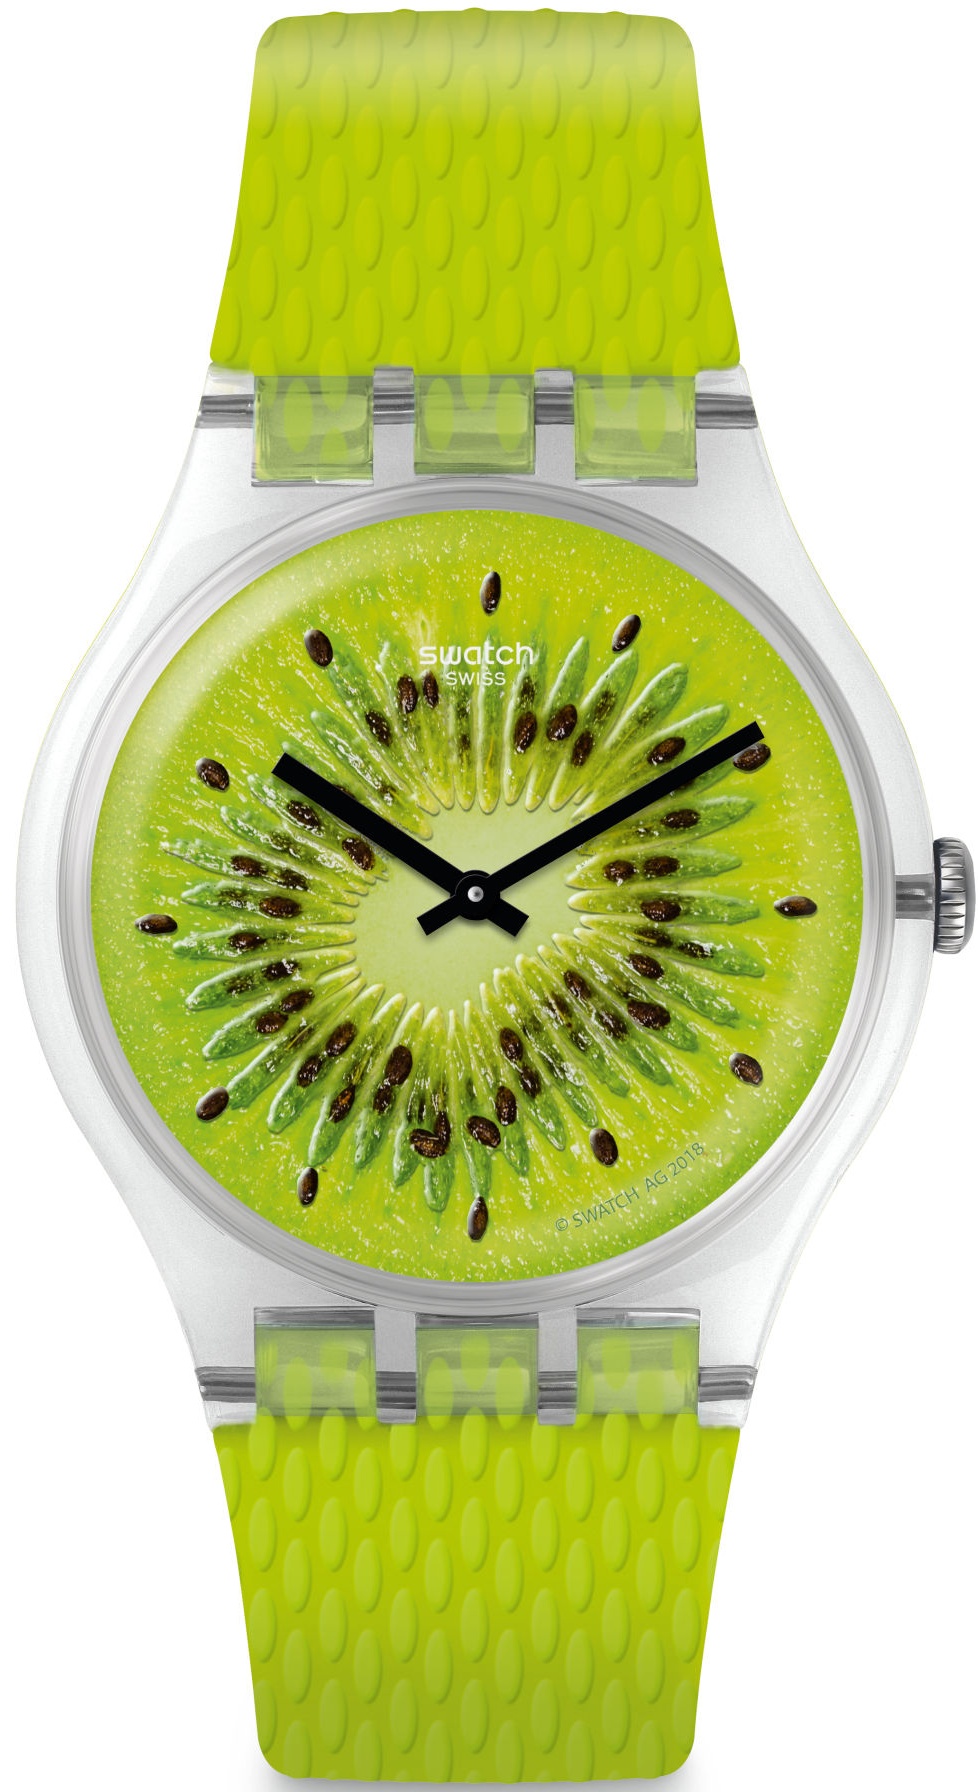 Часы свотч спб. Swatch ge189. Свотч часы suok. Часы Swatch Swiss женские. Часы Swatch Swiss зеленые.